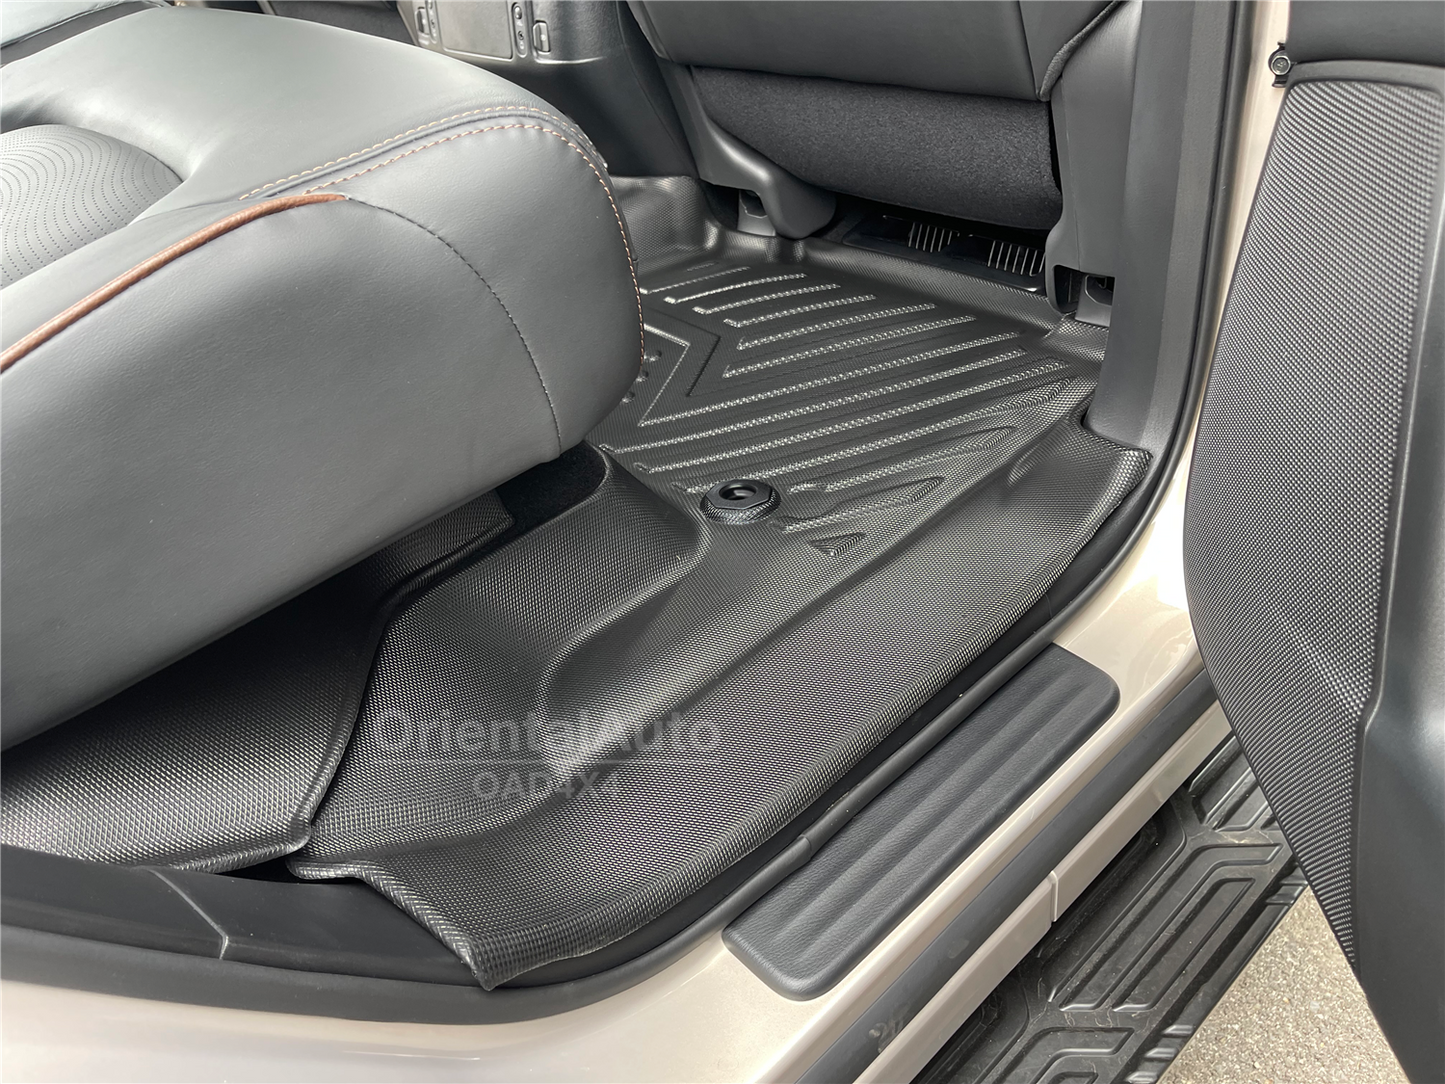 3ROWS 5D TPE Floor Mats for Nissan Patrol Y62 2012-Onwards Tailored Door Sill Covered Car Floor Mat Liner